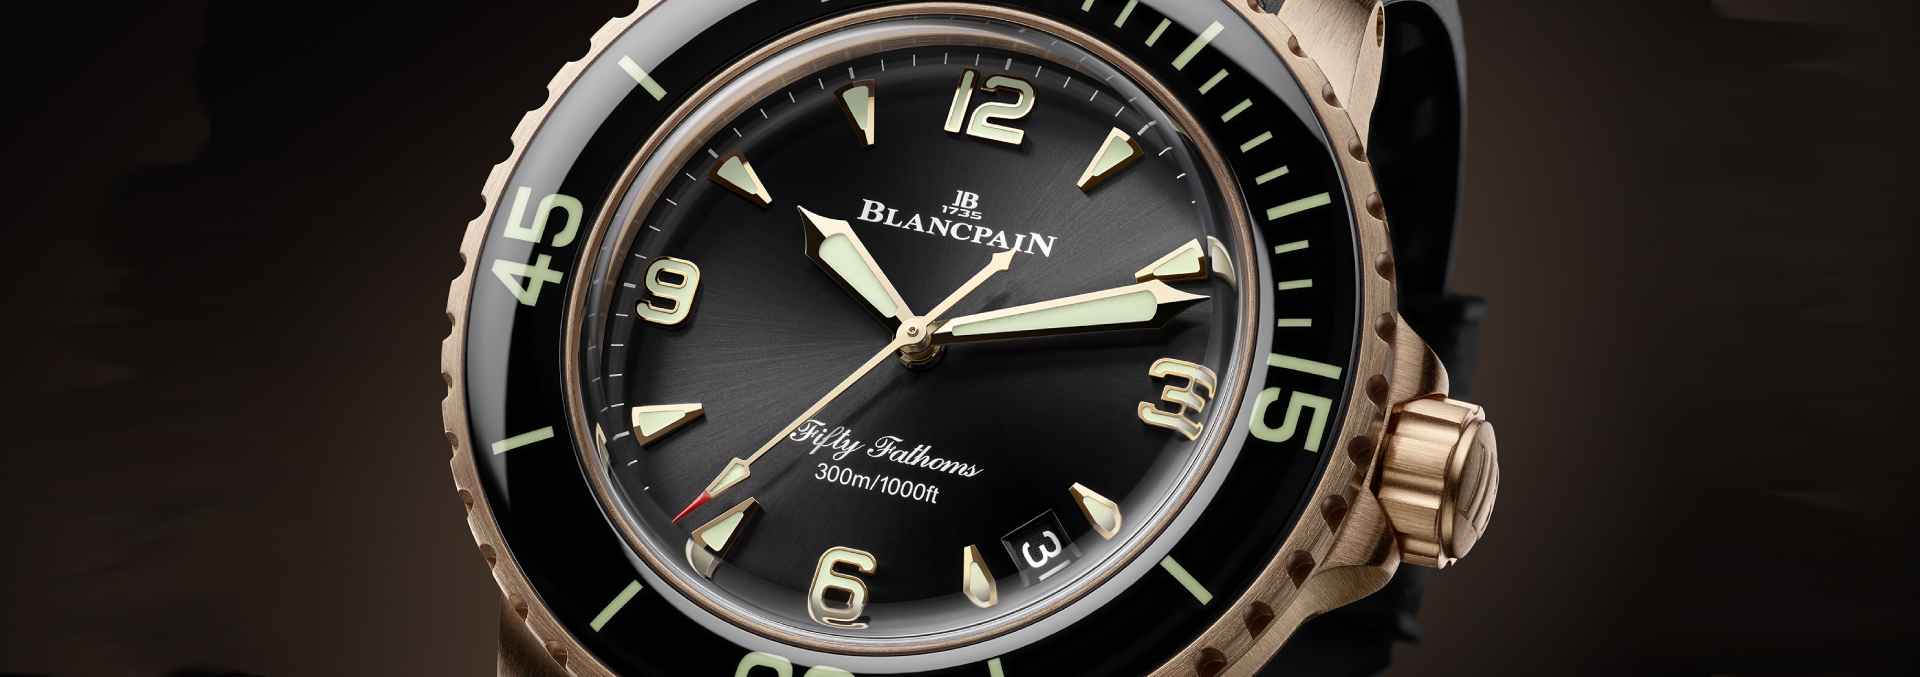 Blancpain Fifty Fathoms  5010 36b30 B64a Cortina Watch Desktop Banner